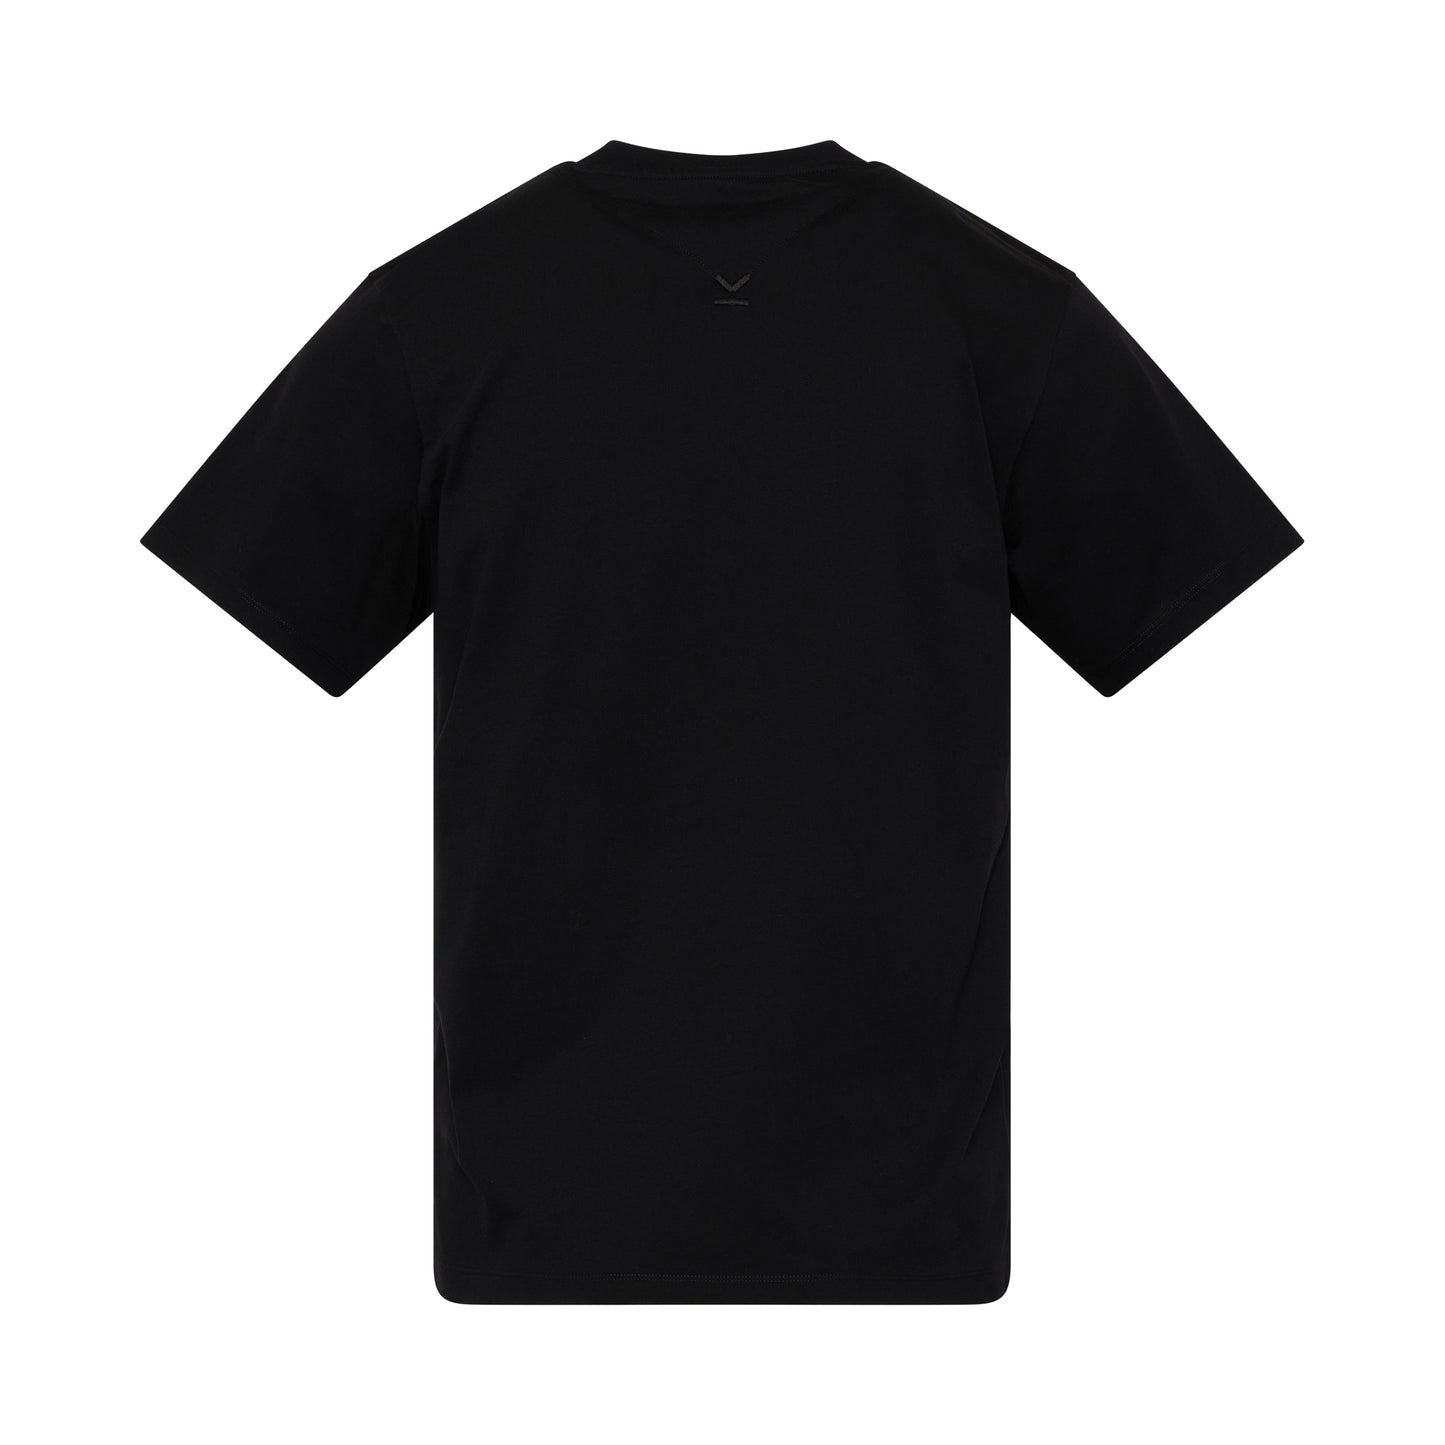 Kenzo Classic Logo T-Shirt in Black